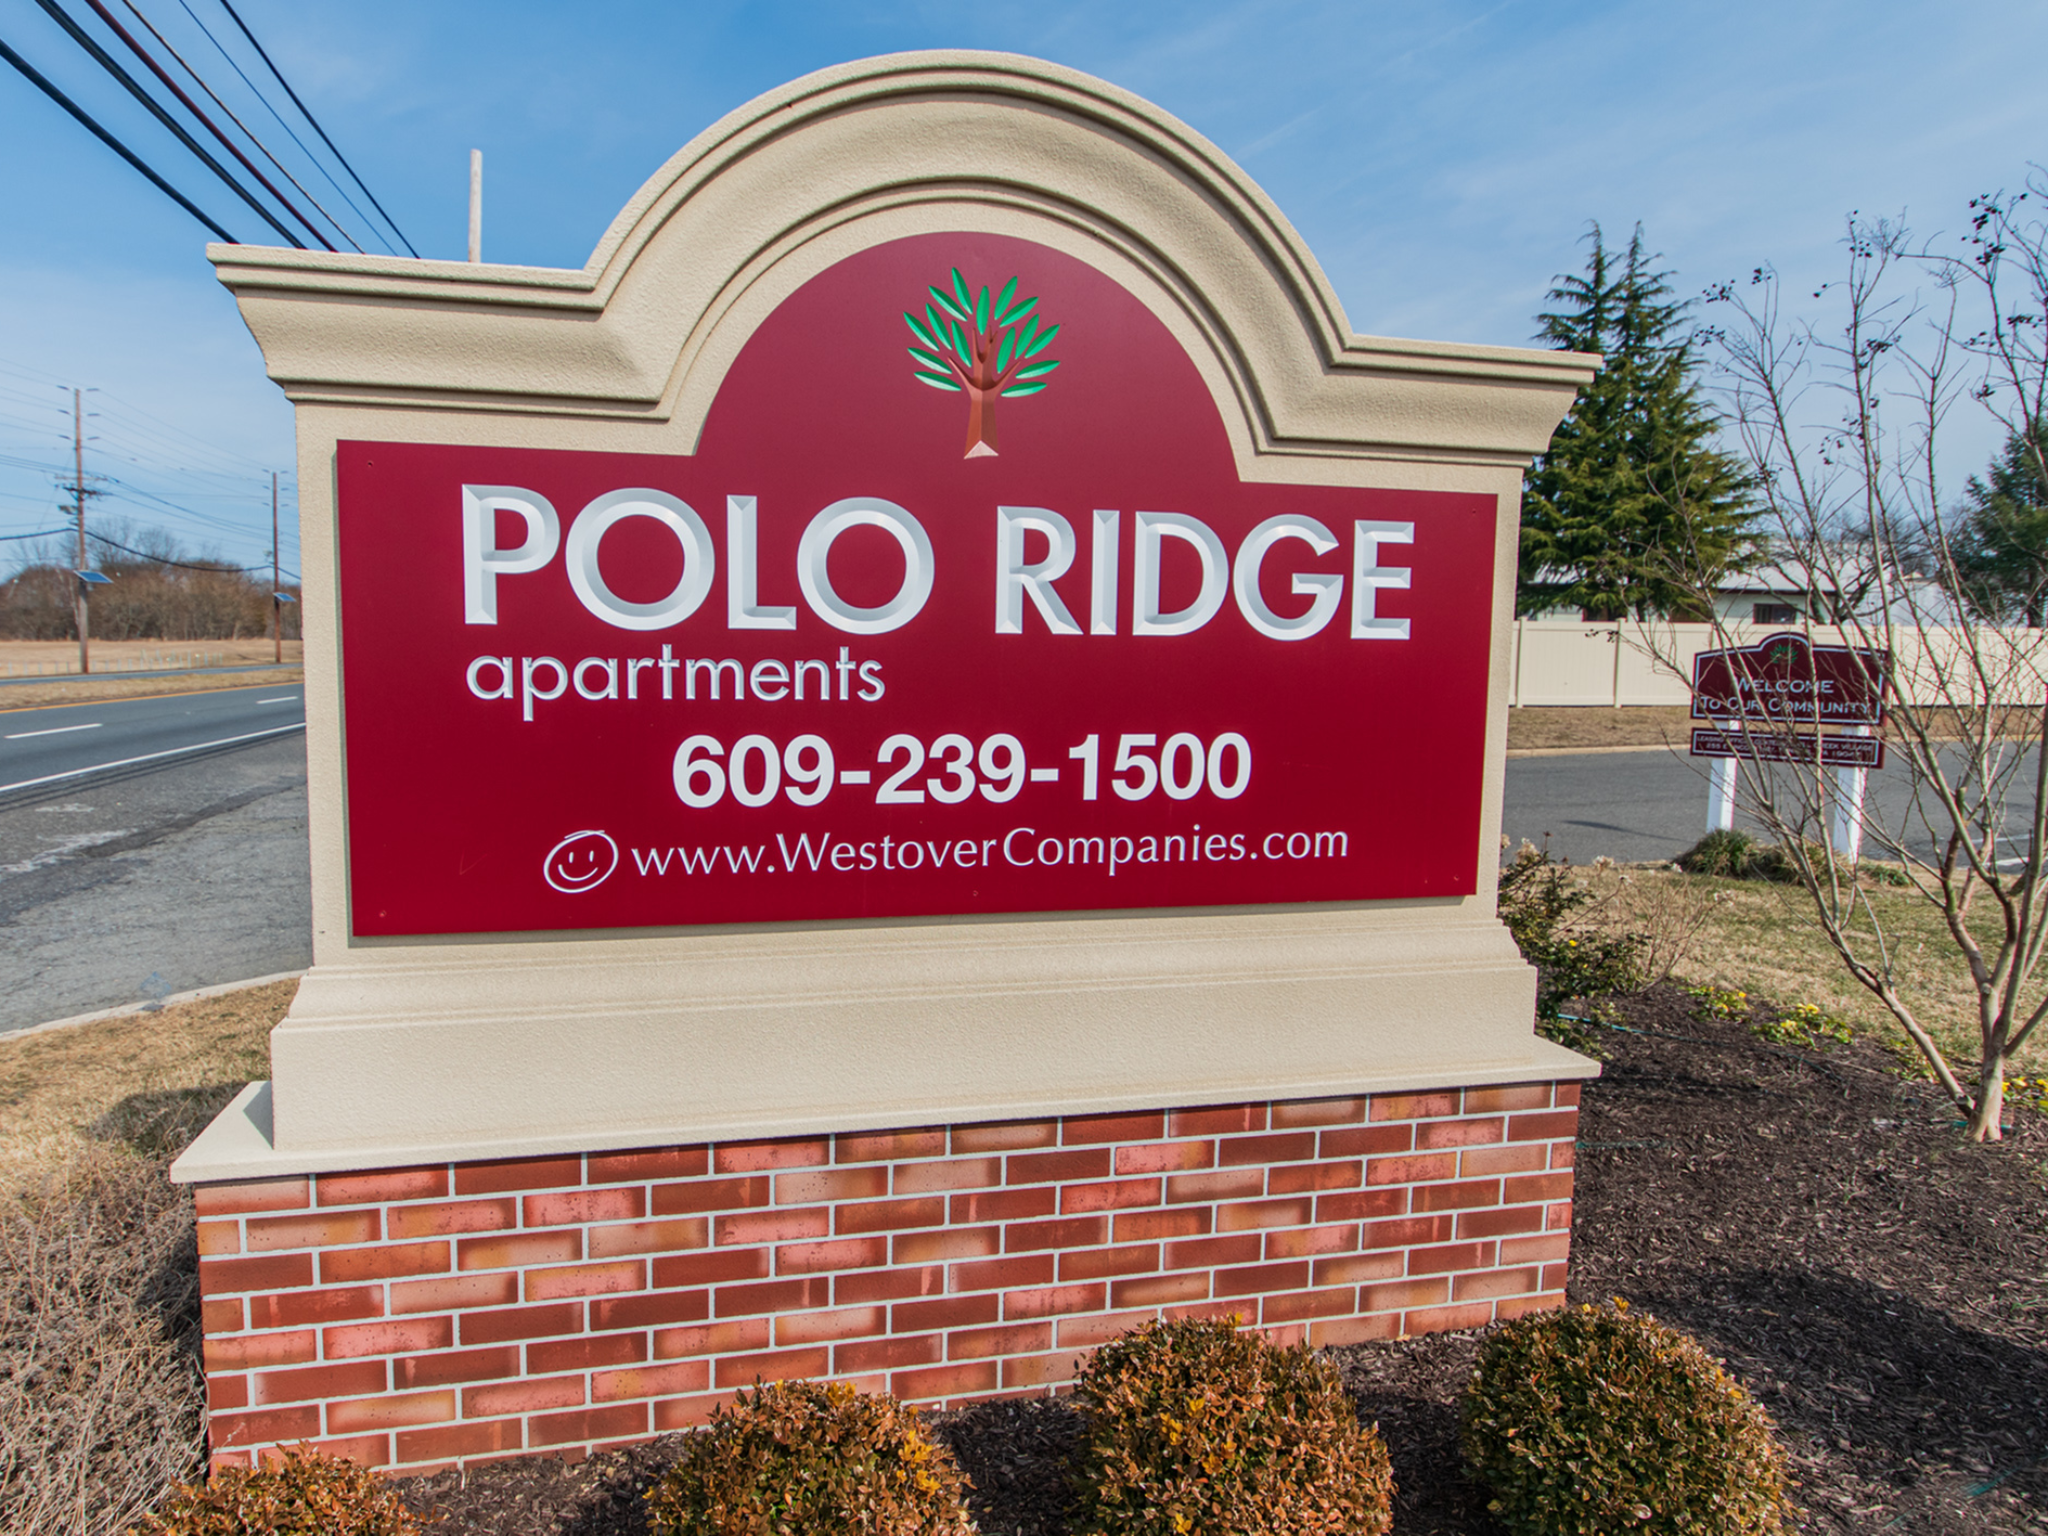 Polo Ridge Apartments exterior signage.